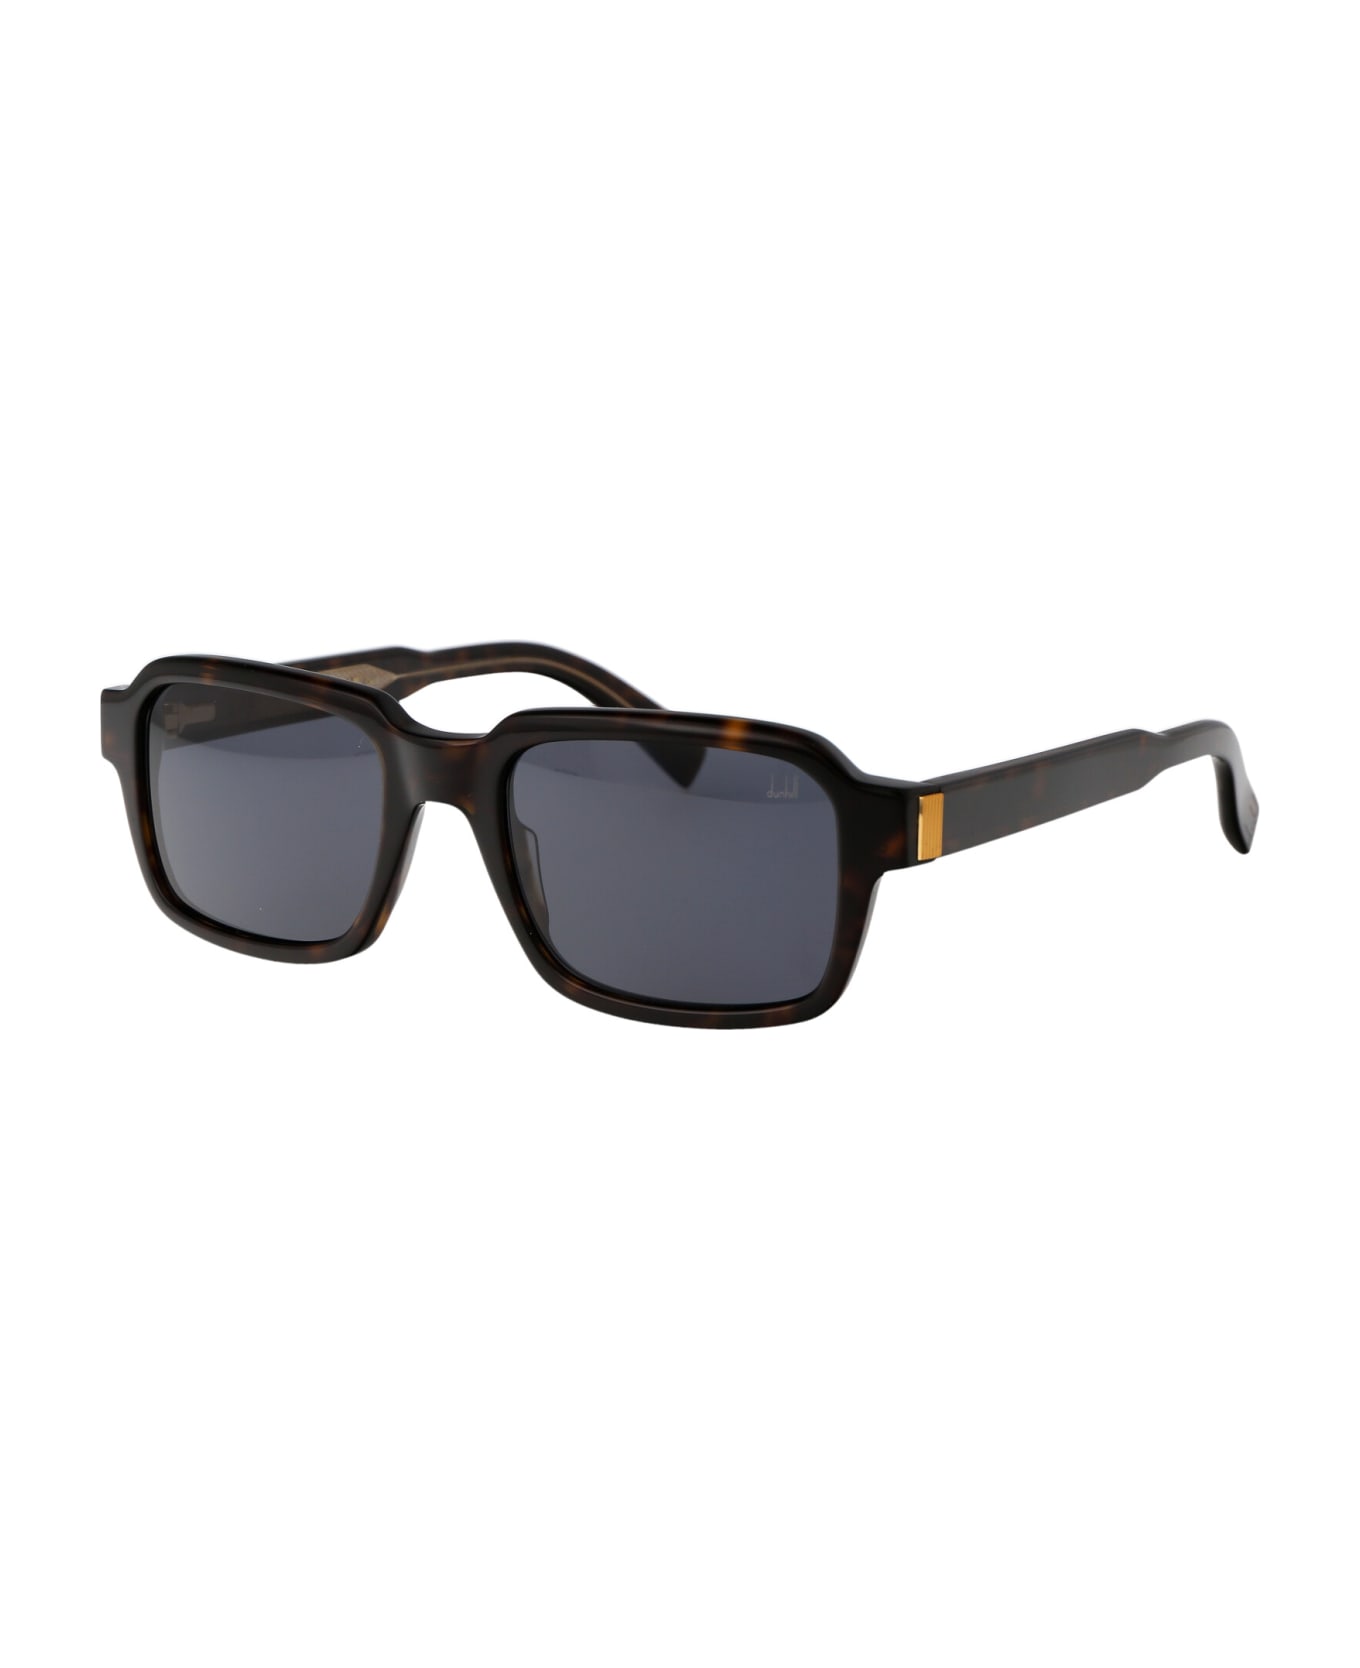 Dunhill Du0057s Sunglasses - 002 HAVANA HAVANA GREY